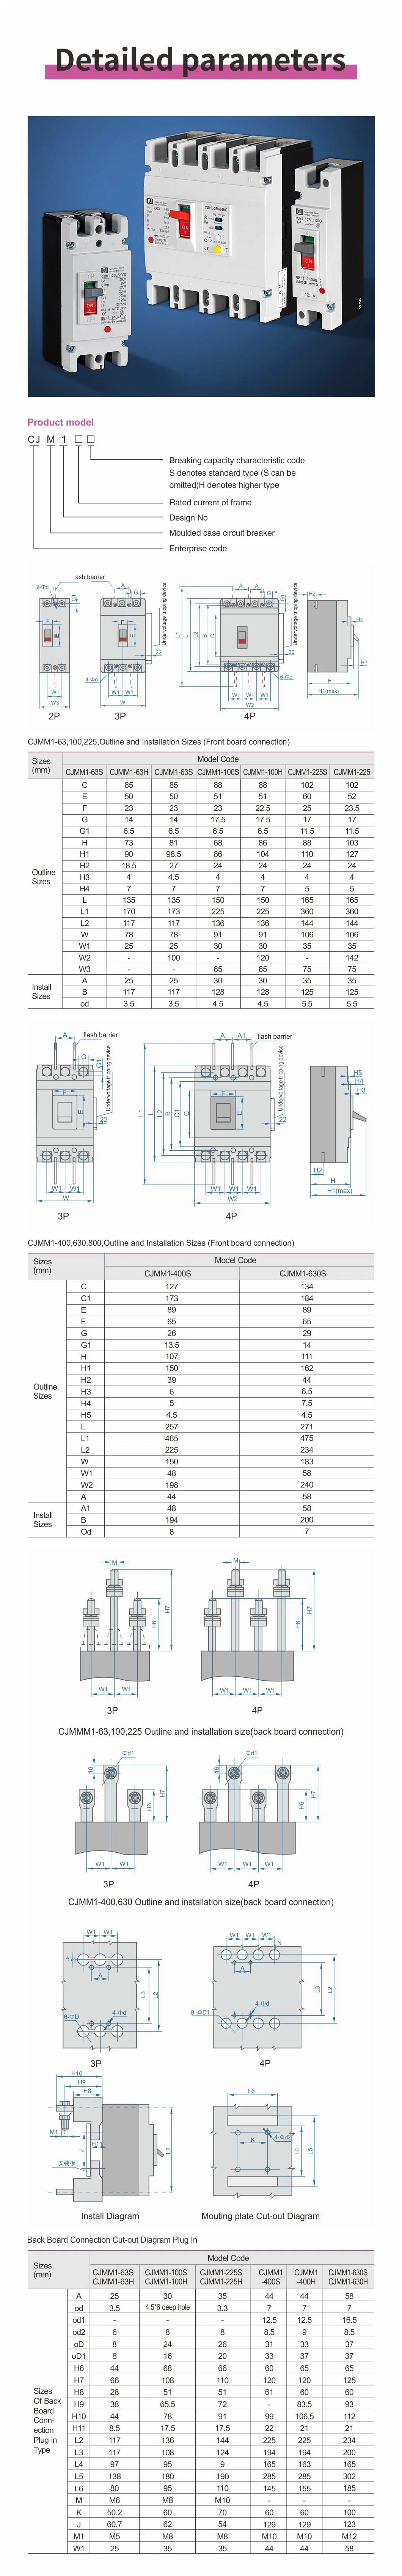 MCCB Moulded Case Circuit Breaker MCCB-225